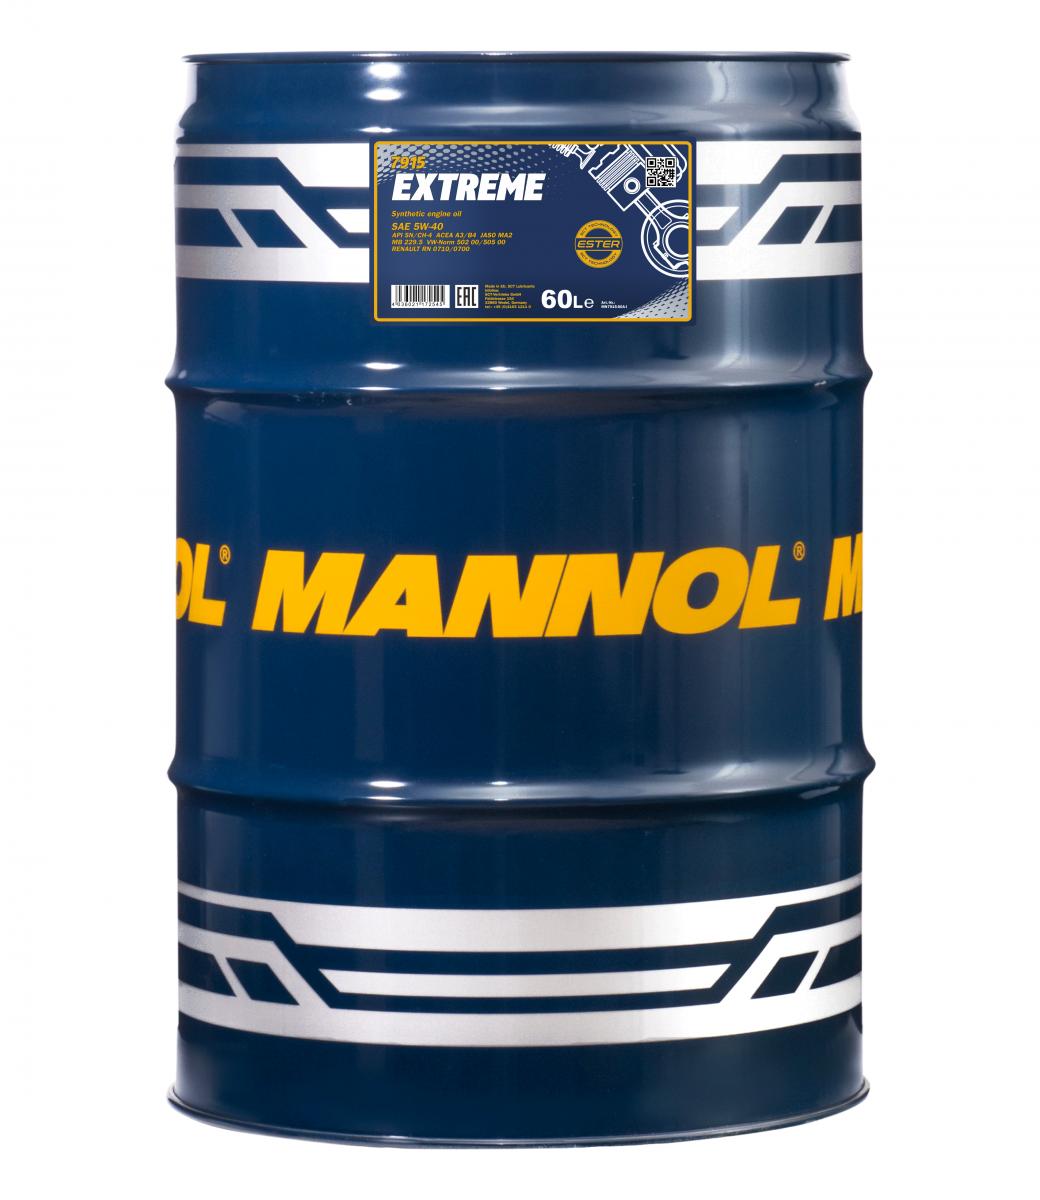 MANNOL Extreme 5W-40 Motoröl 5l - SAE 5W-40 - PKW Motoröle - Mannol - Öl  Marken - Öle 